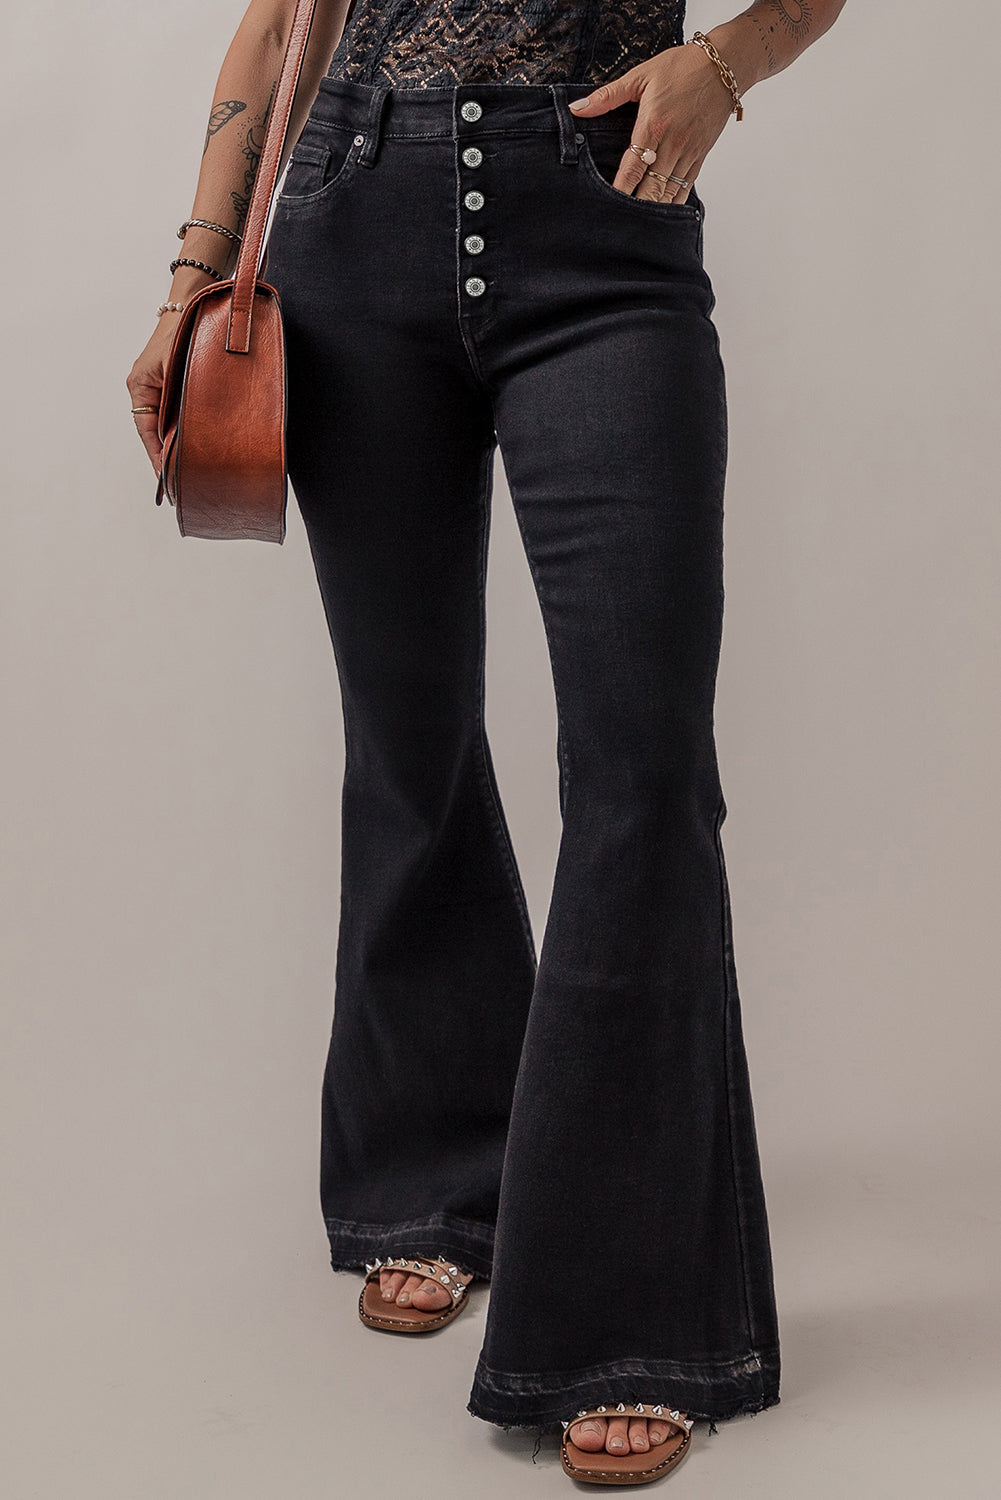 Black high waist button front flare jeans - 10 71% cotton + 27.5% polyester + 1.5% elastane